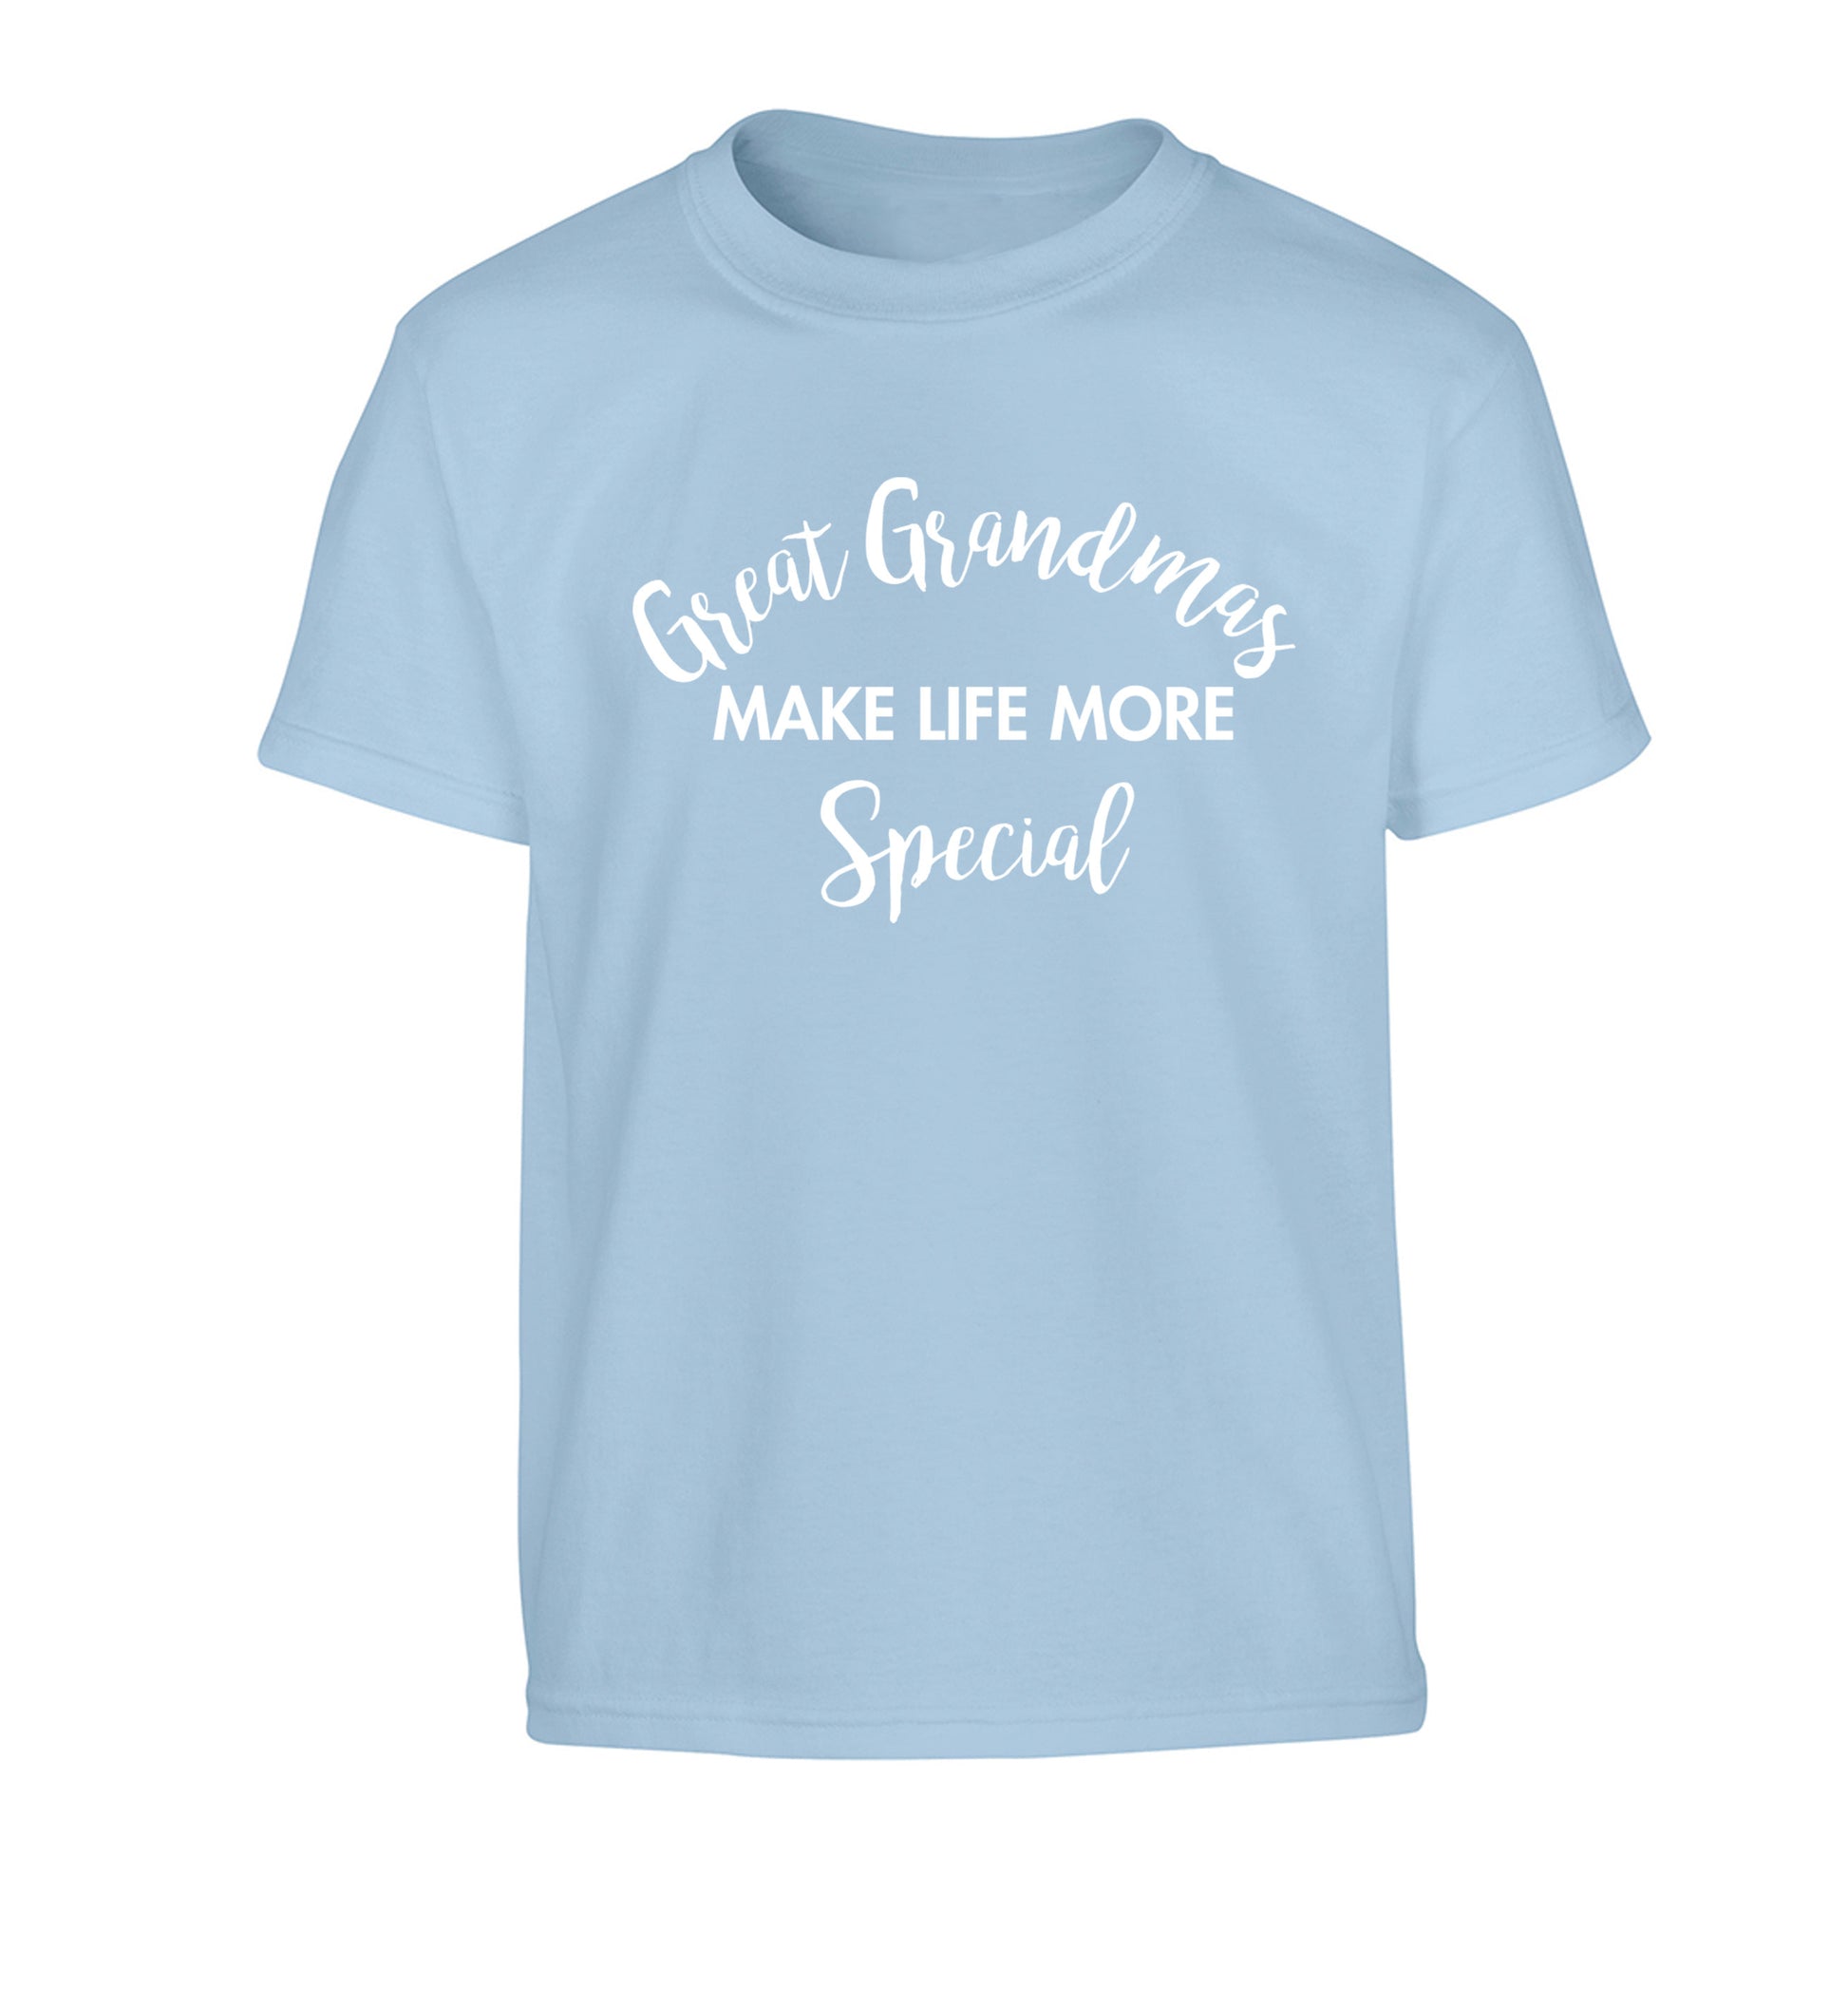 Great Grandmas make life more special Children's light blue Tshirt 12-14 Years